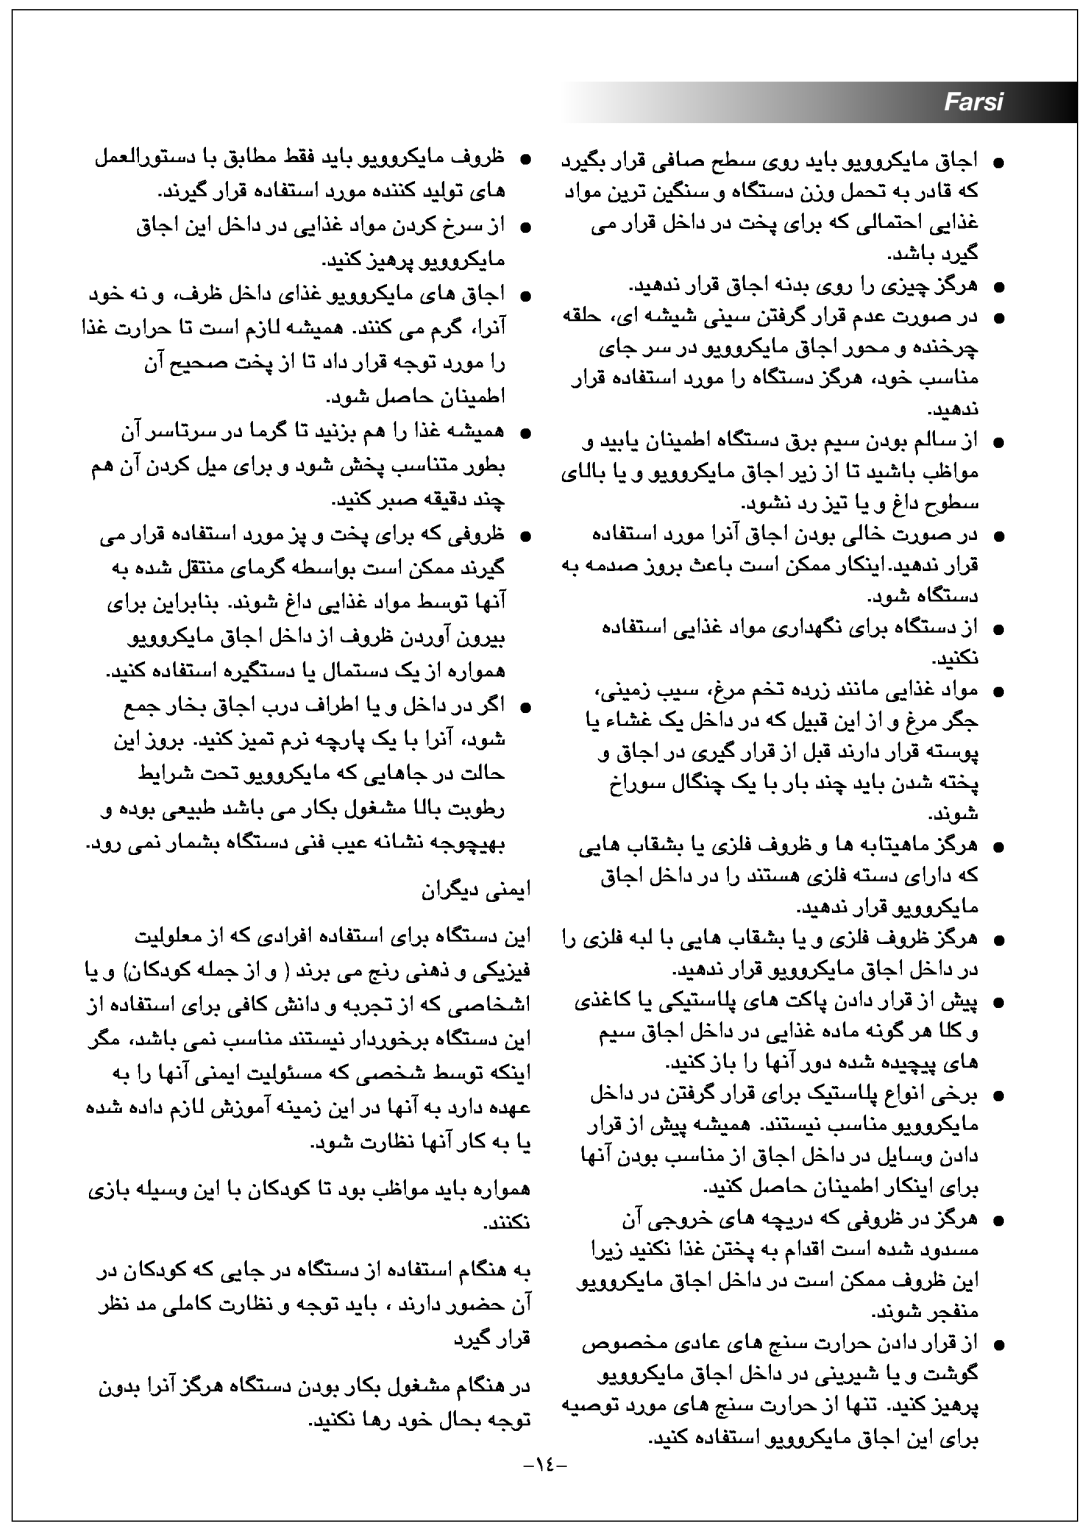 Black & Decker MY2000PSA manual Farsi, ﻞﻤﻌﻟﺍﺭﻮﺘﺳﺩ ﺎﺑ ﻖﺑﺎﻄﻣ ﻂﻘﻓ ﺪﯾﺎﺑ ﻮﯾﻭﻭﺮﮑﯾﺎﻣ ﻑﻭﺮﻇ 